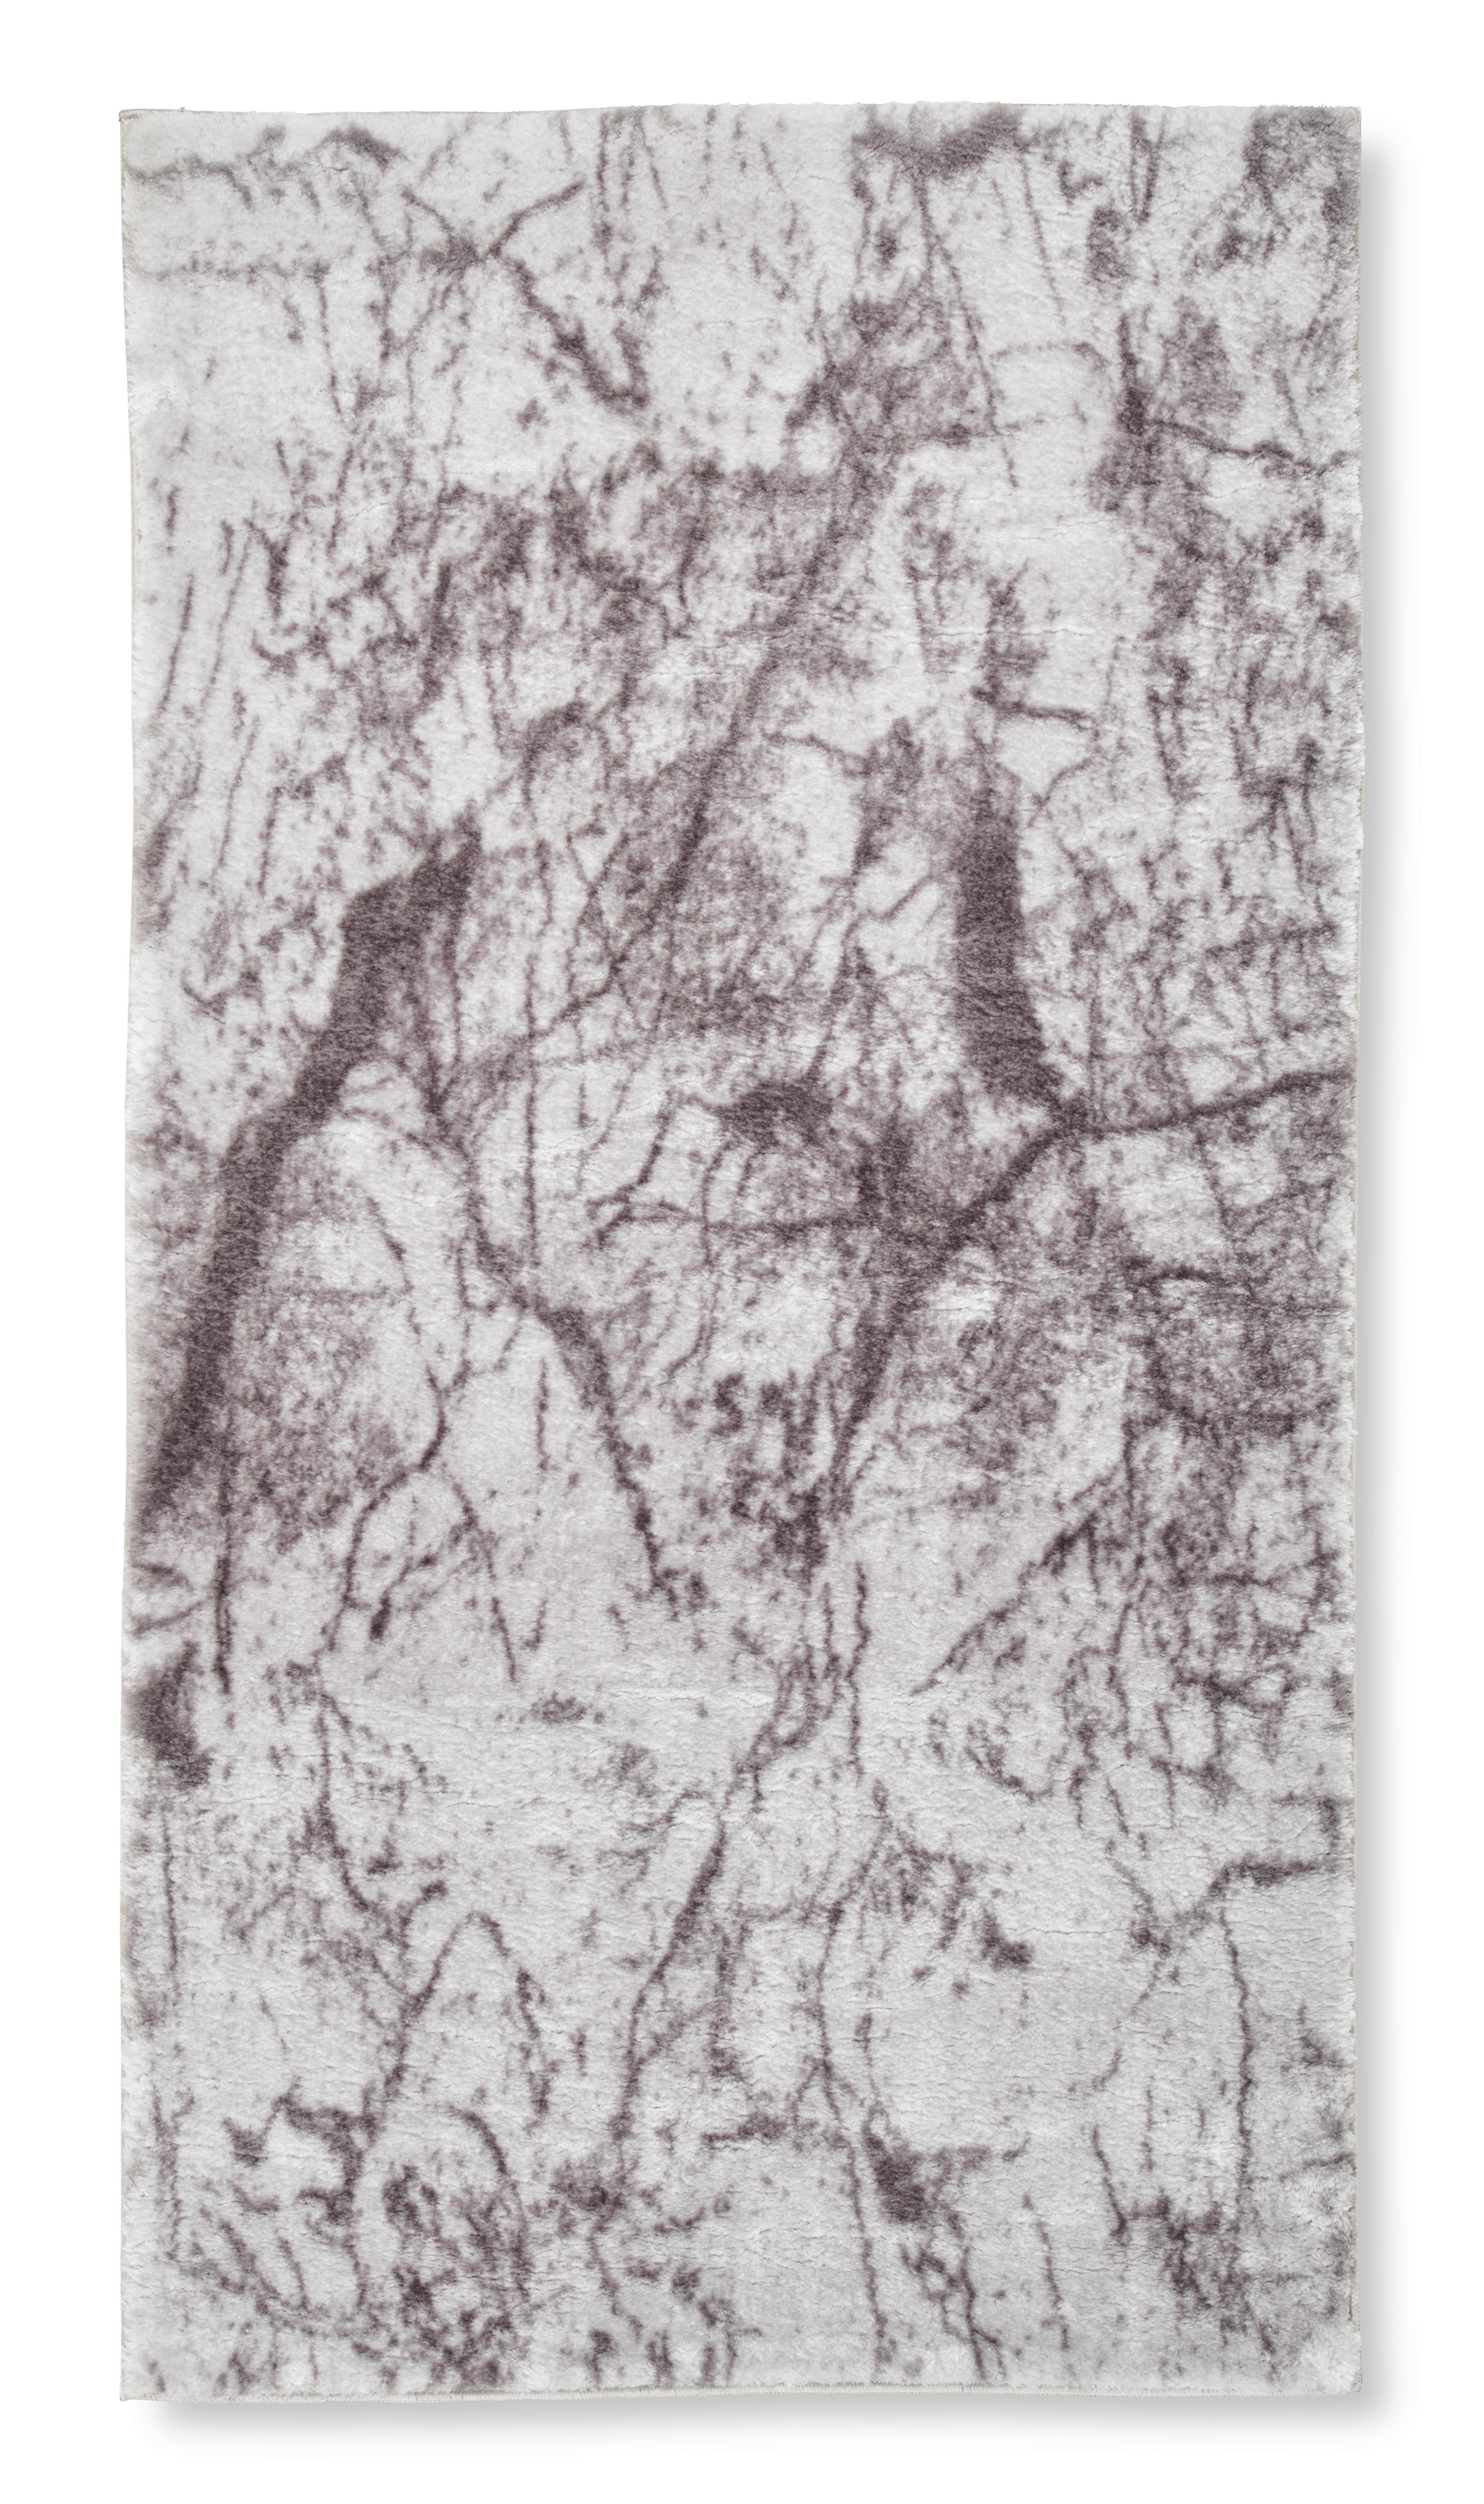 Fellteppich Clay Grau Marmoriert 80x150 cm, Waschbar